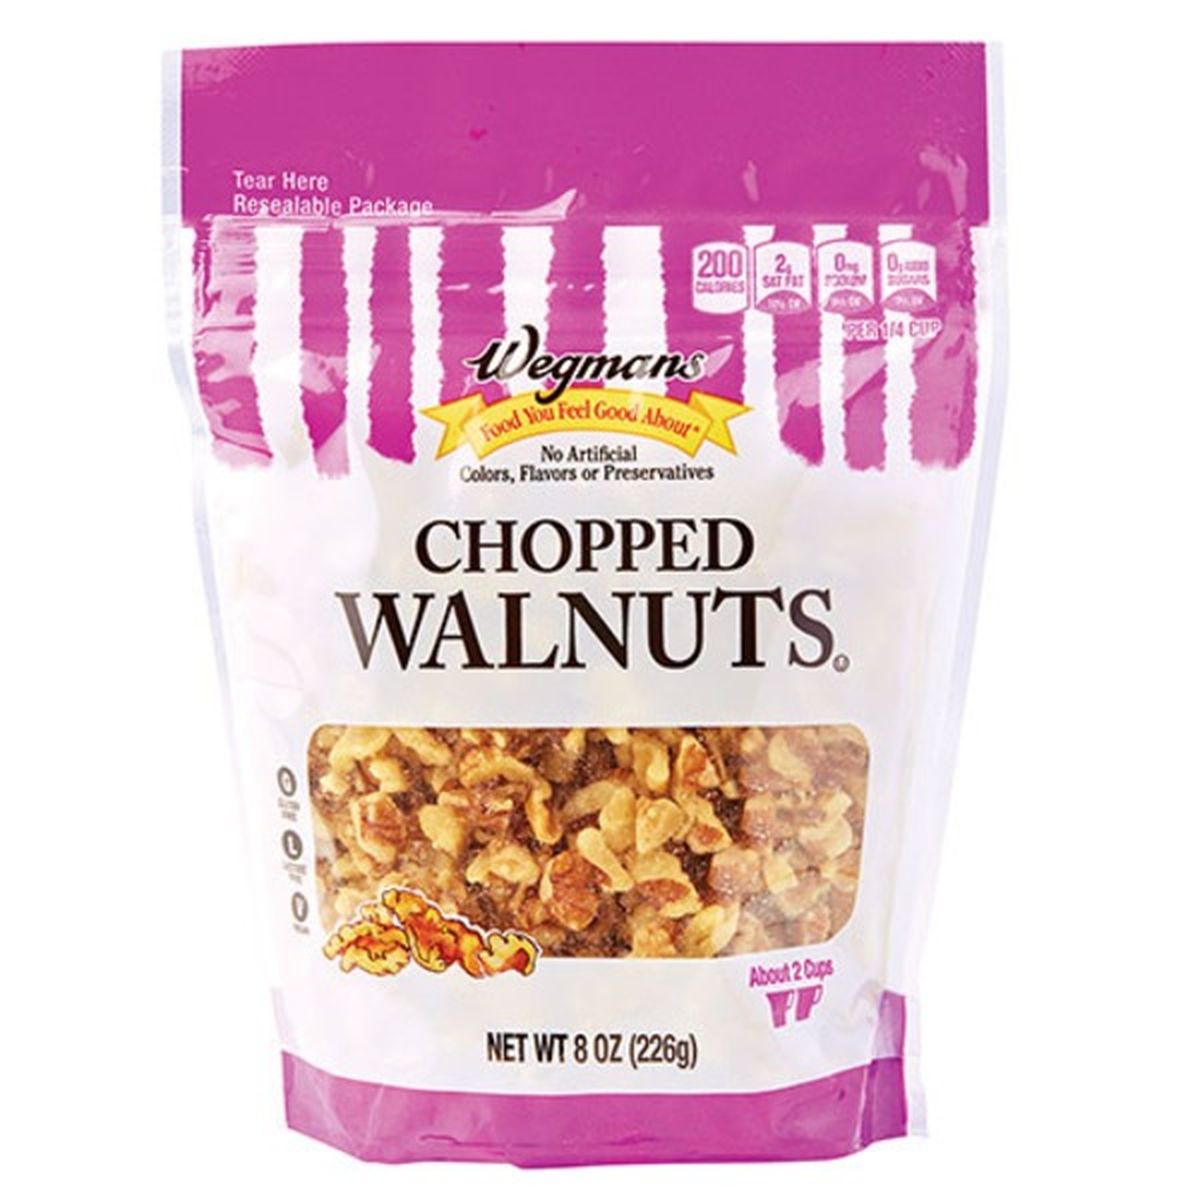 Calories in Wegmans Chopped Walnuts